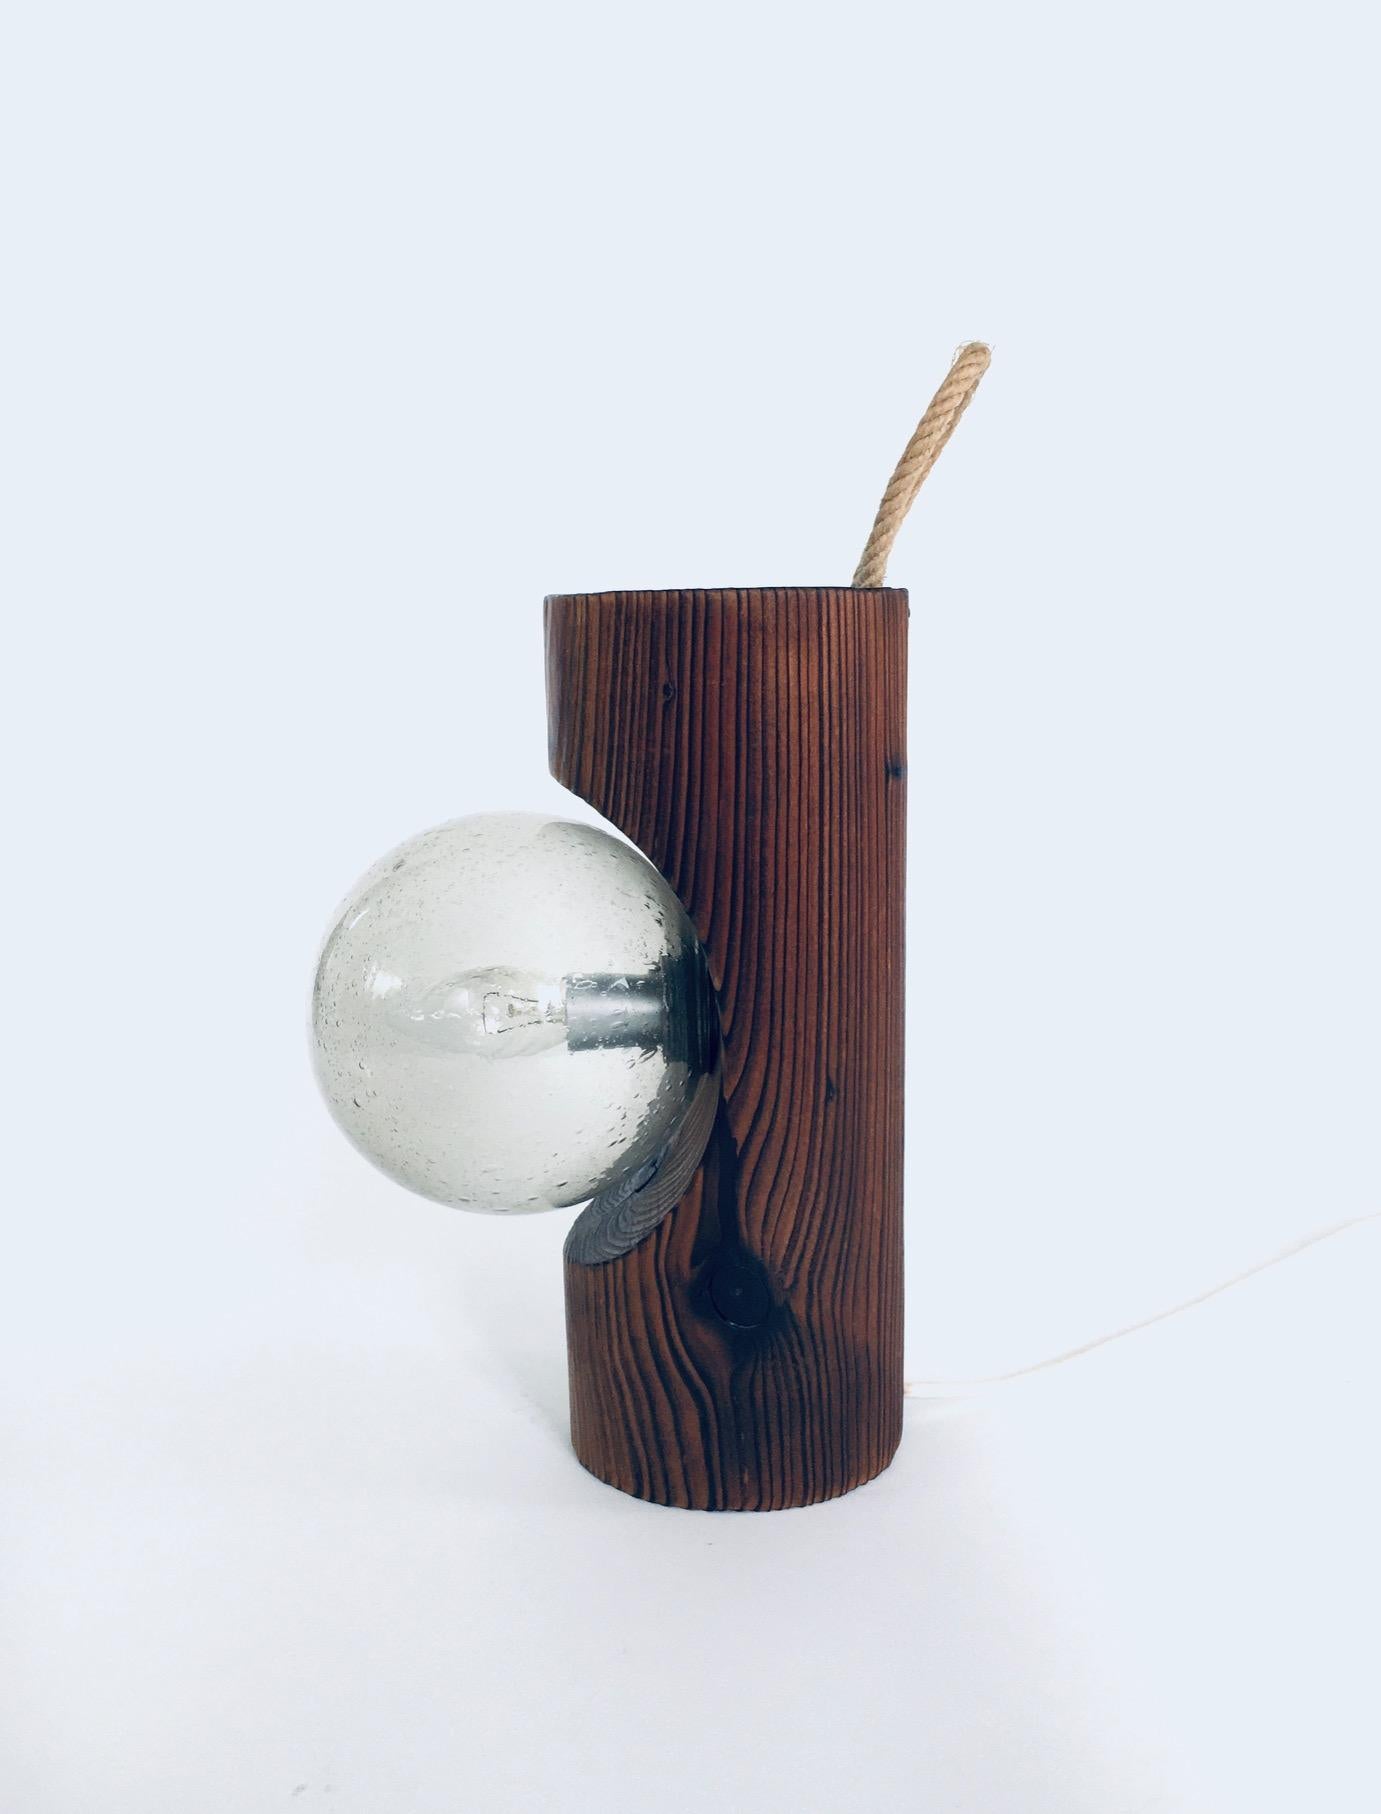 Brutalist Design Wood Table or Wall Lamp by Temde Leuchten, Switzerland 1960's For Sale 2